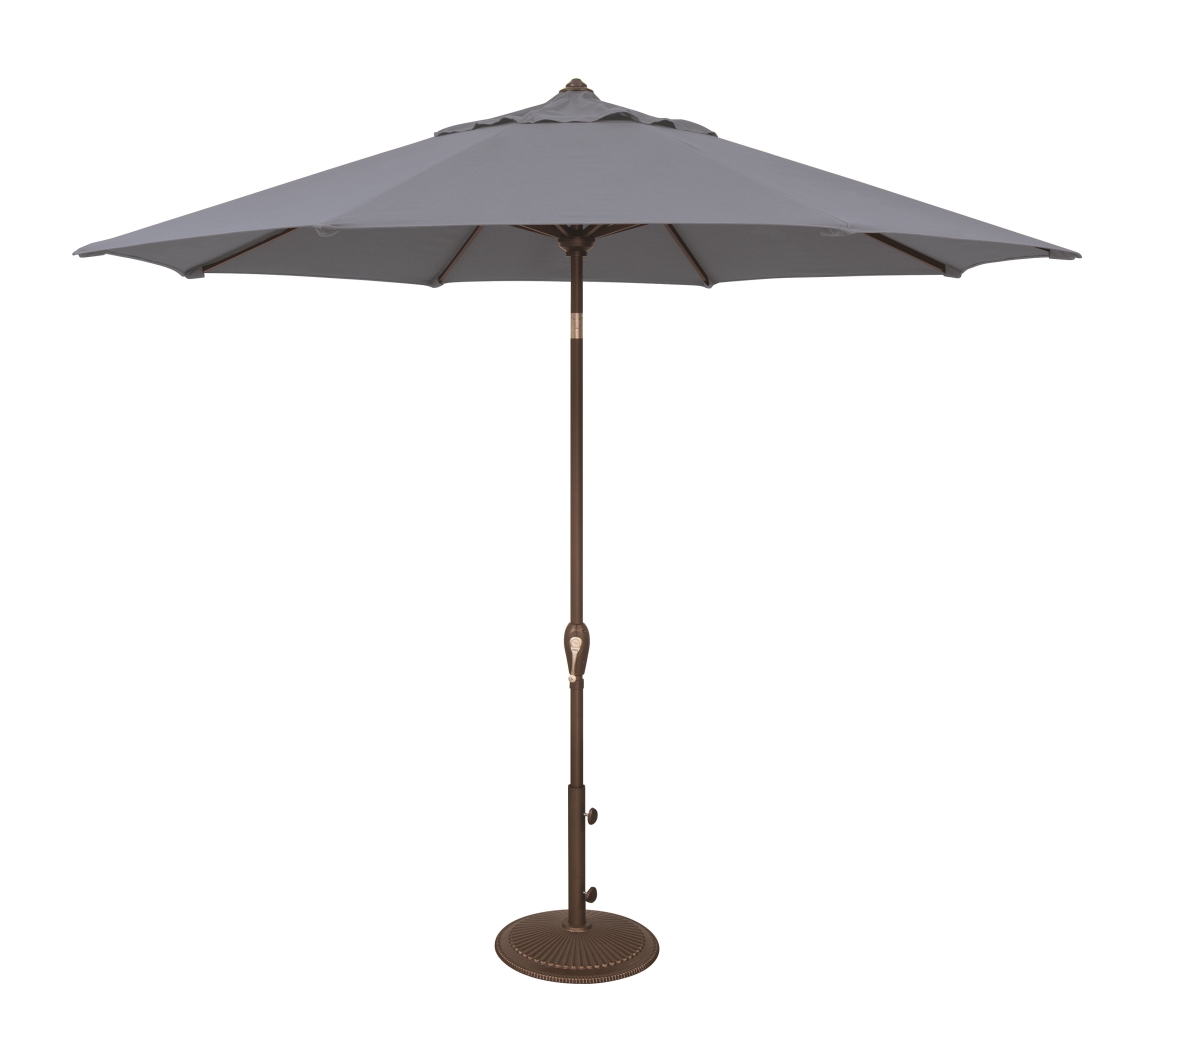 Simplyshade Ssum91-0900-a48103s Aruba 9 Ft. Octagon Sunbrella Auto Tilt Umbrella Cast Ocean